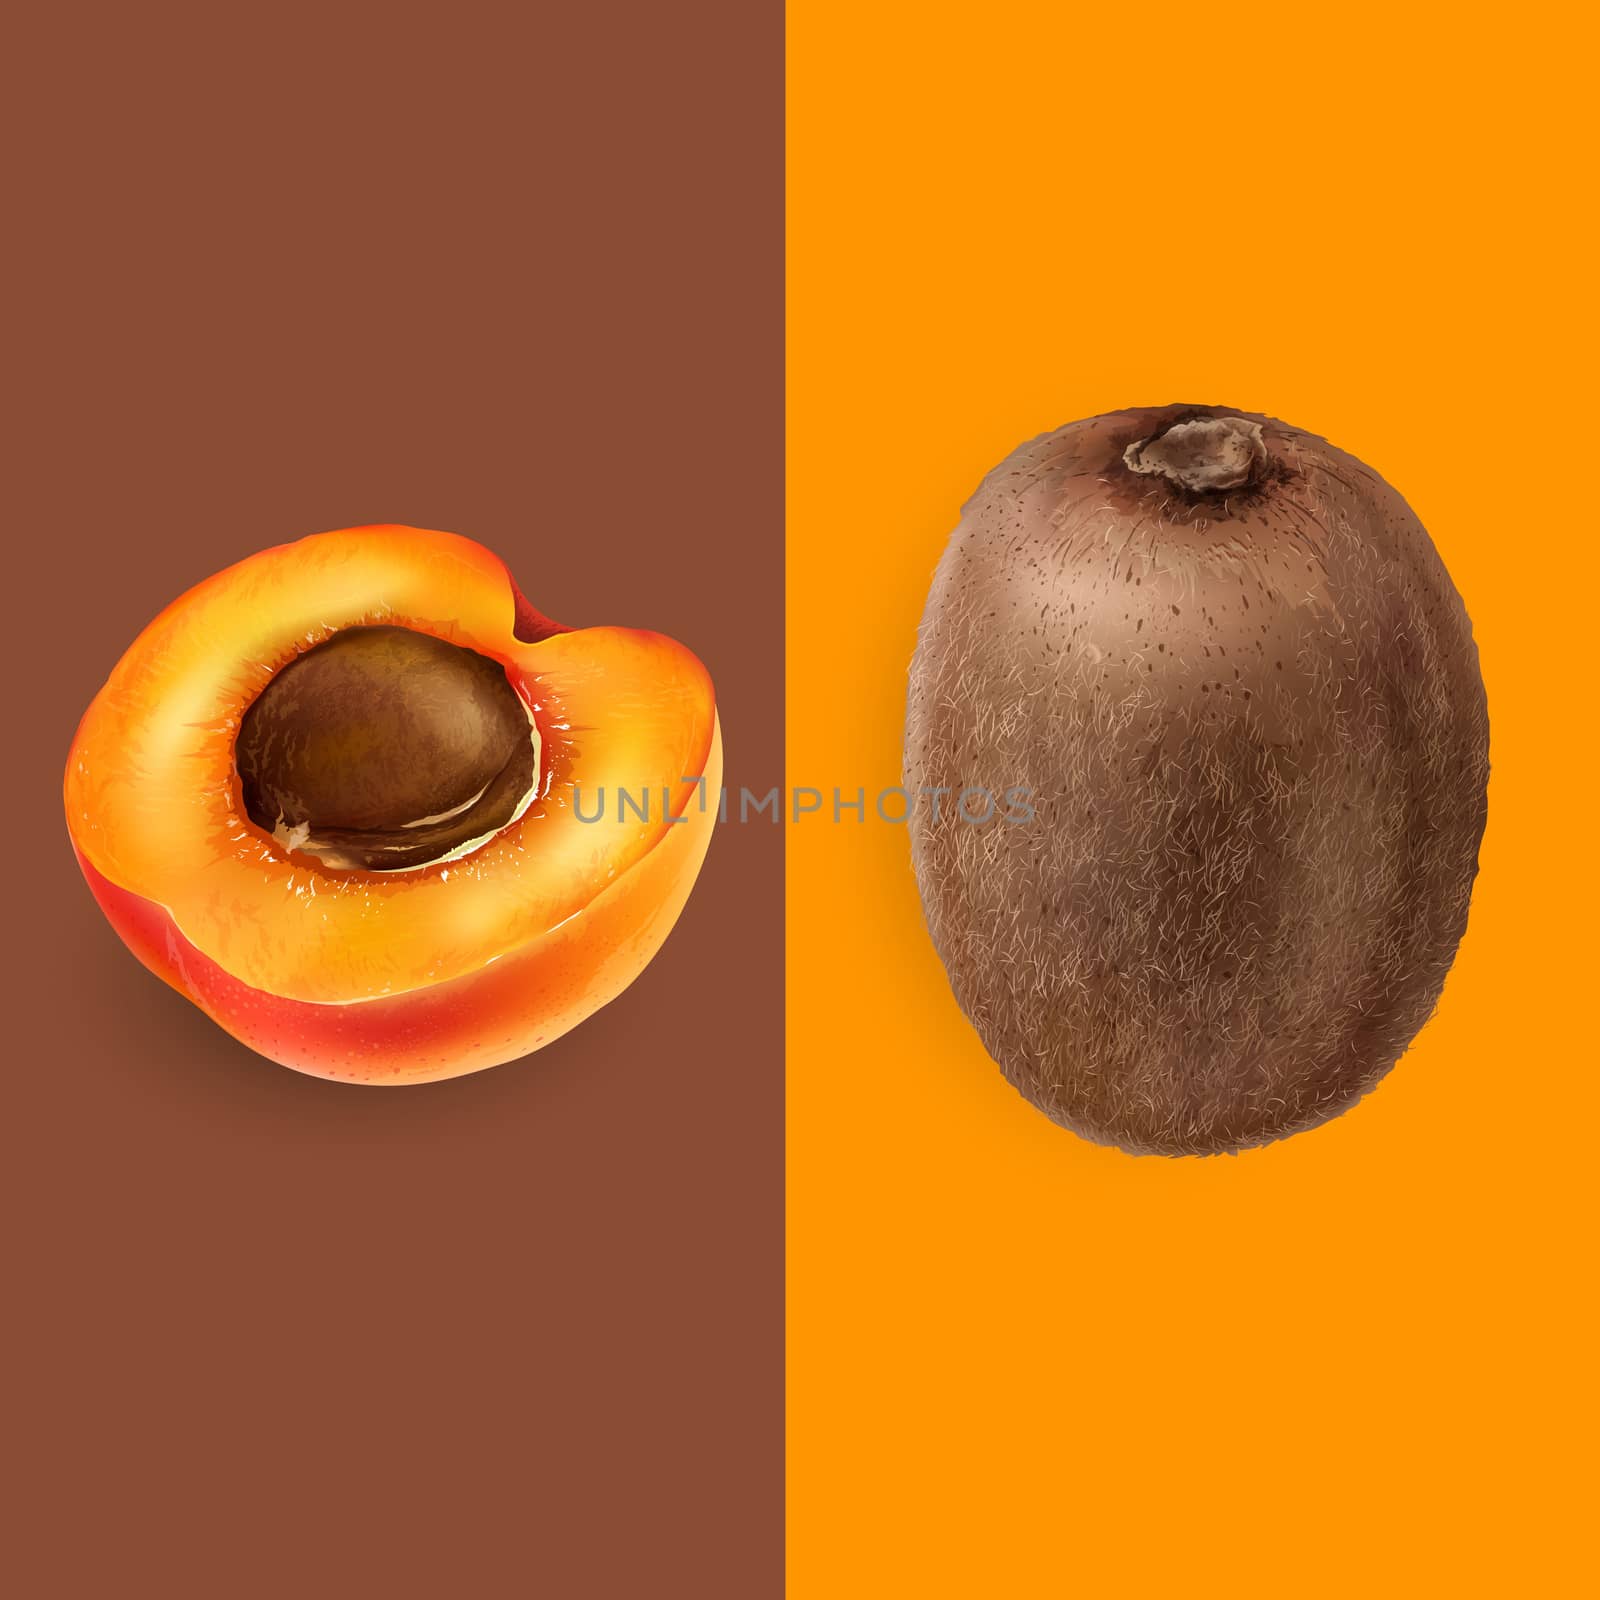 Apricot and kiwi on orange and chocolate background.